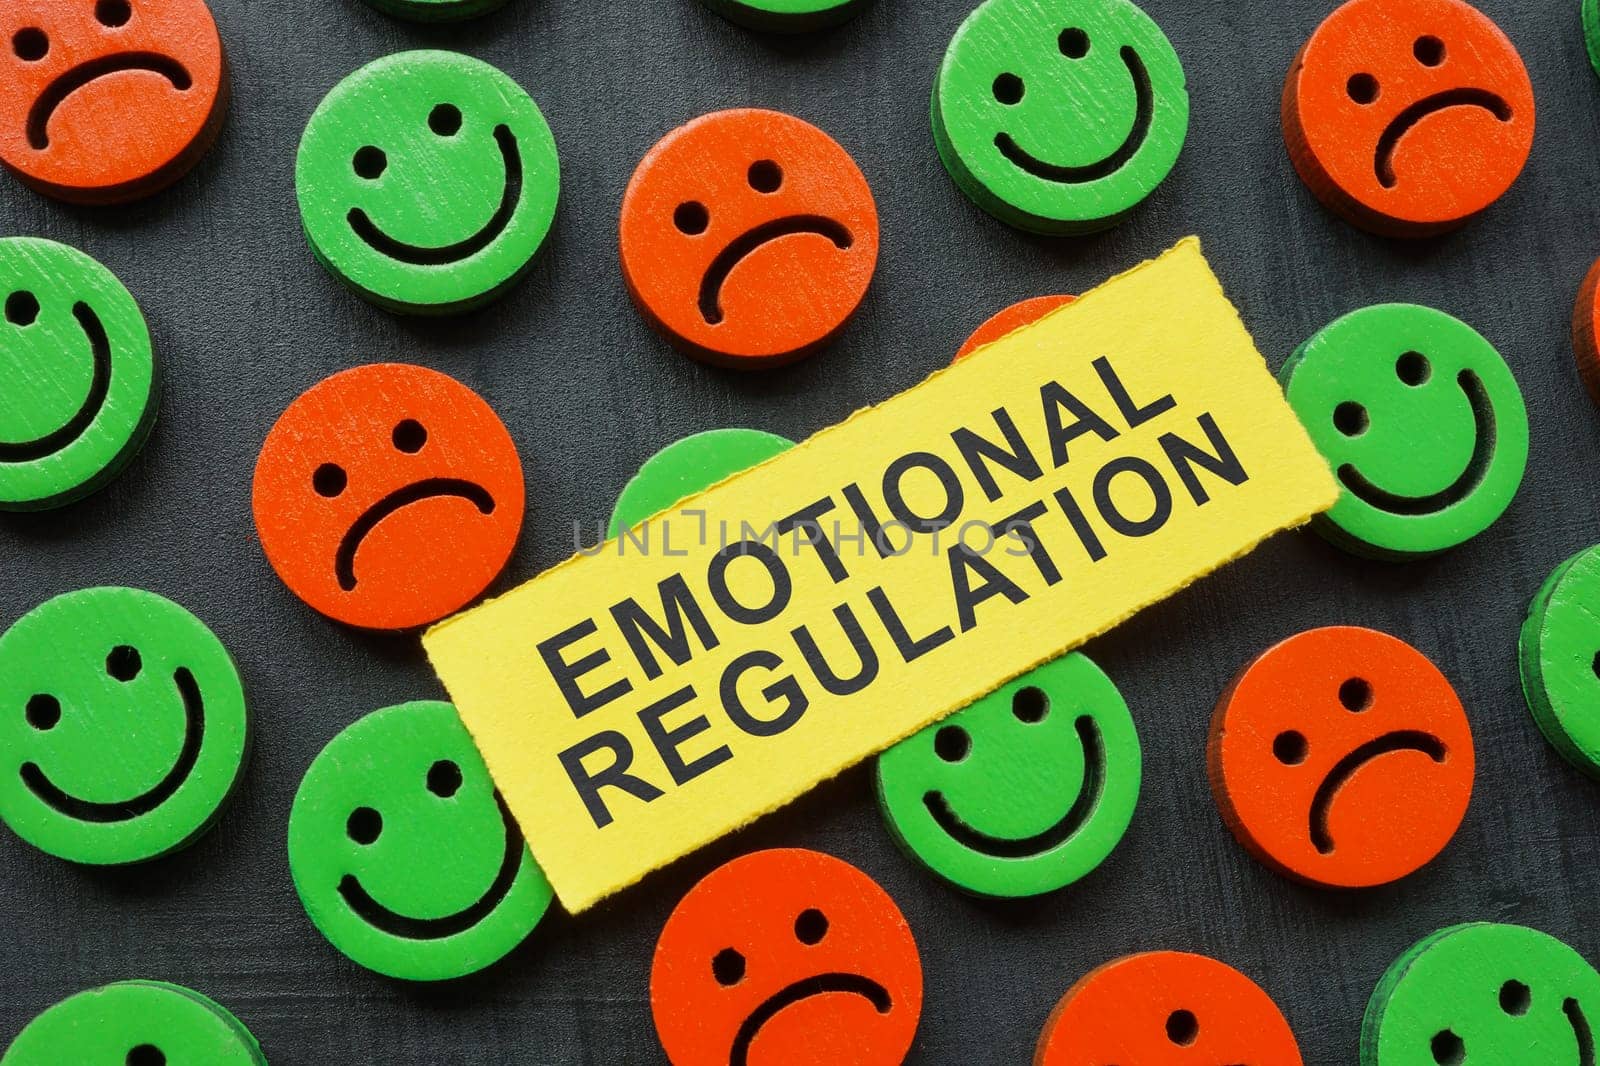 The inscription emotional regulation lies on happy and sad emoticons. by designer491